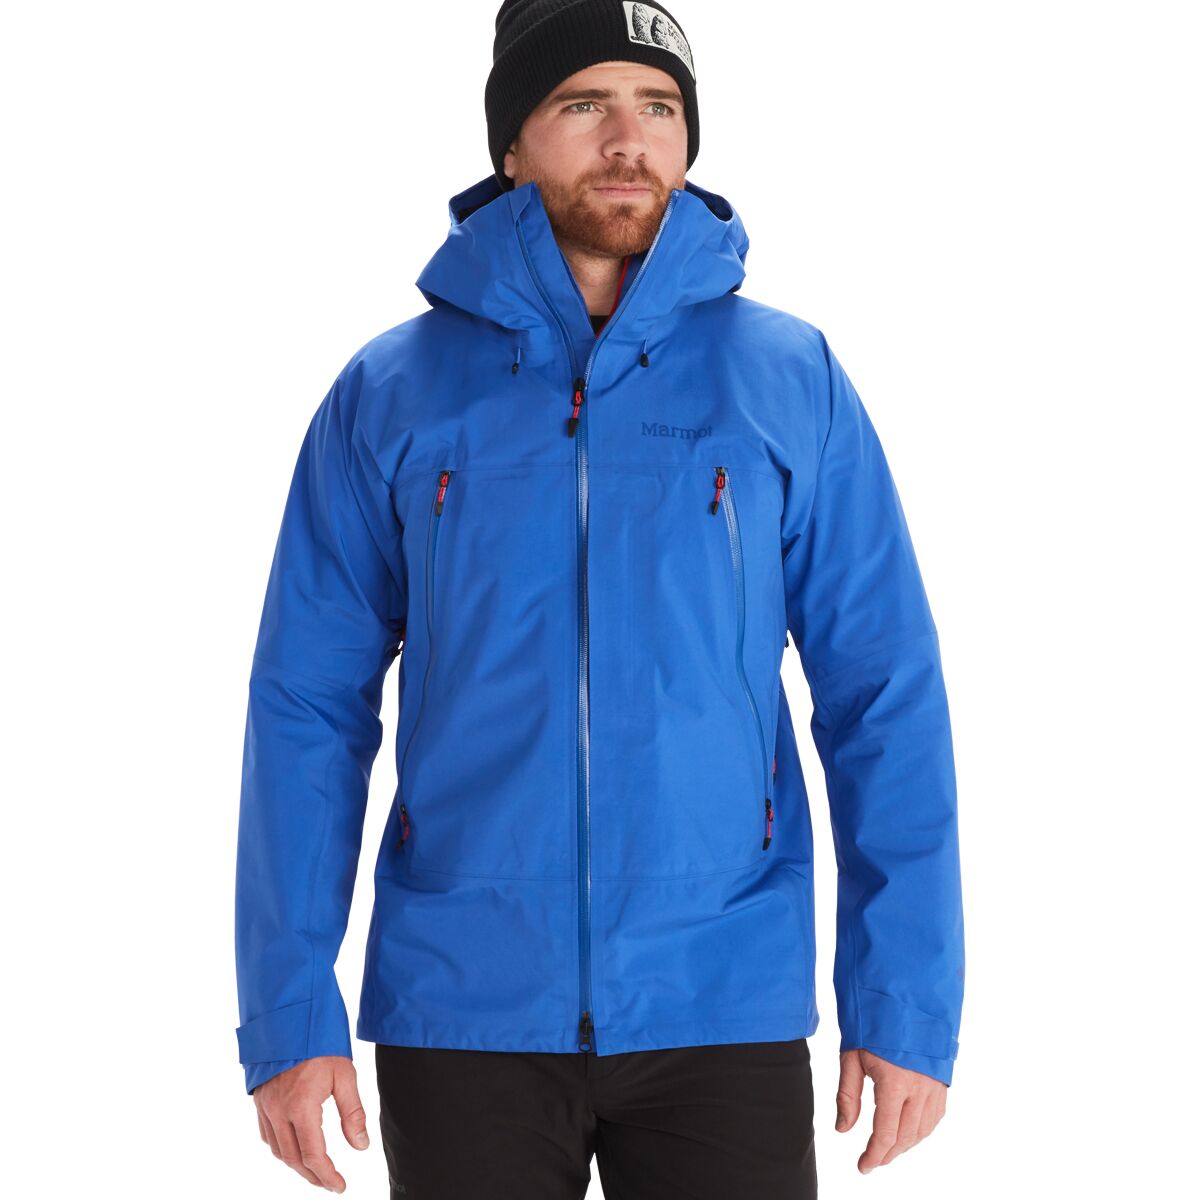 Alpinist GORE-TEX Jacket - Men's